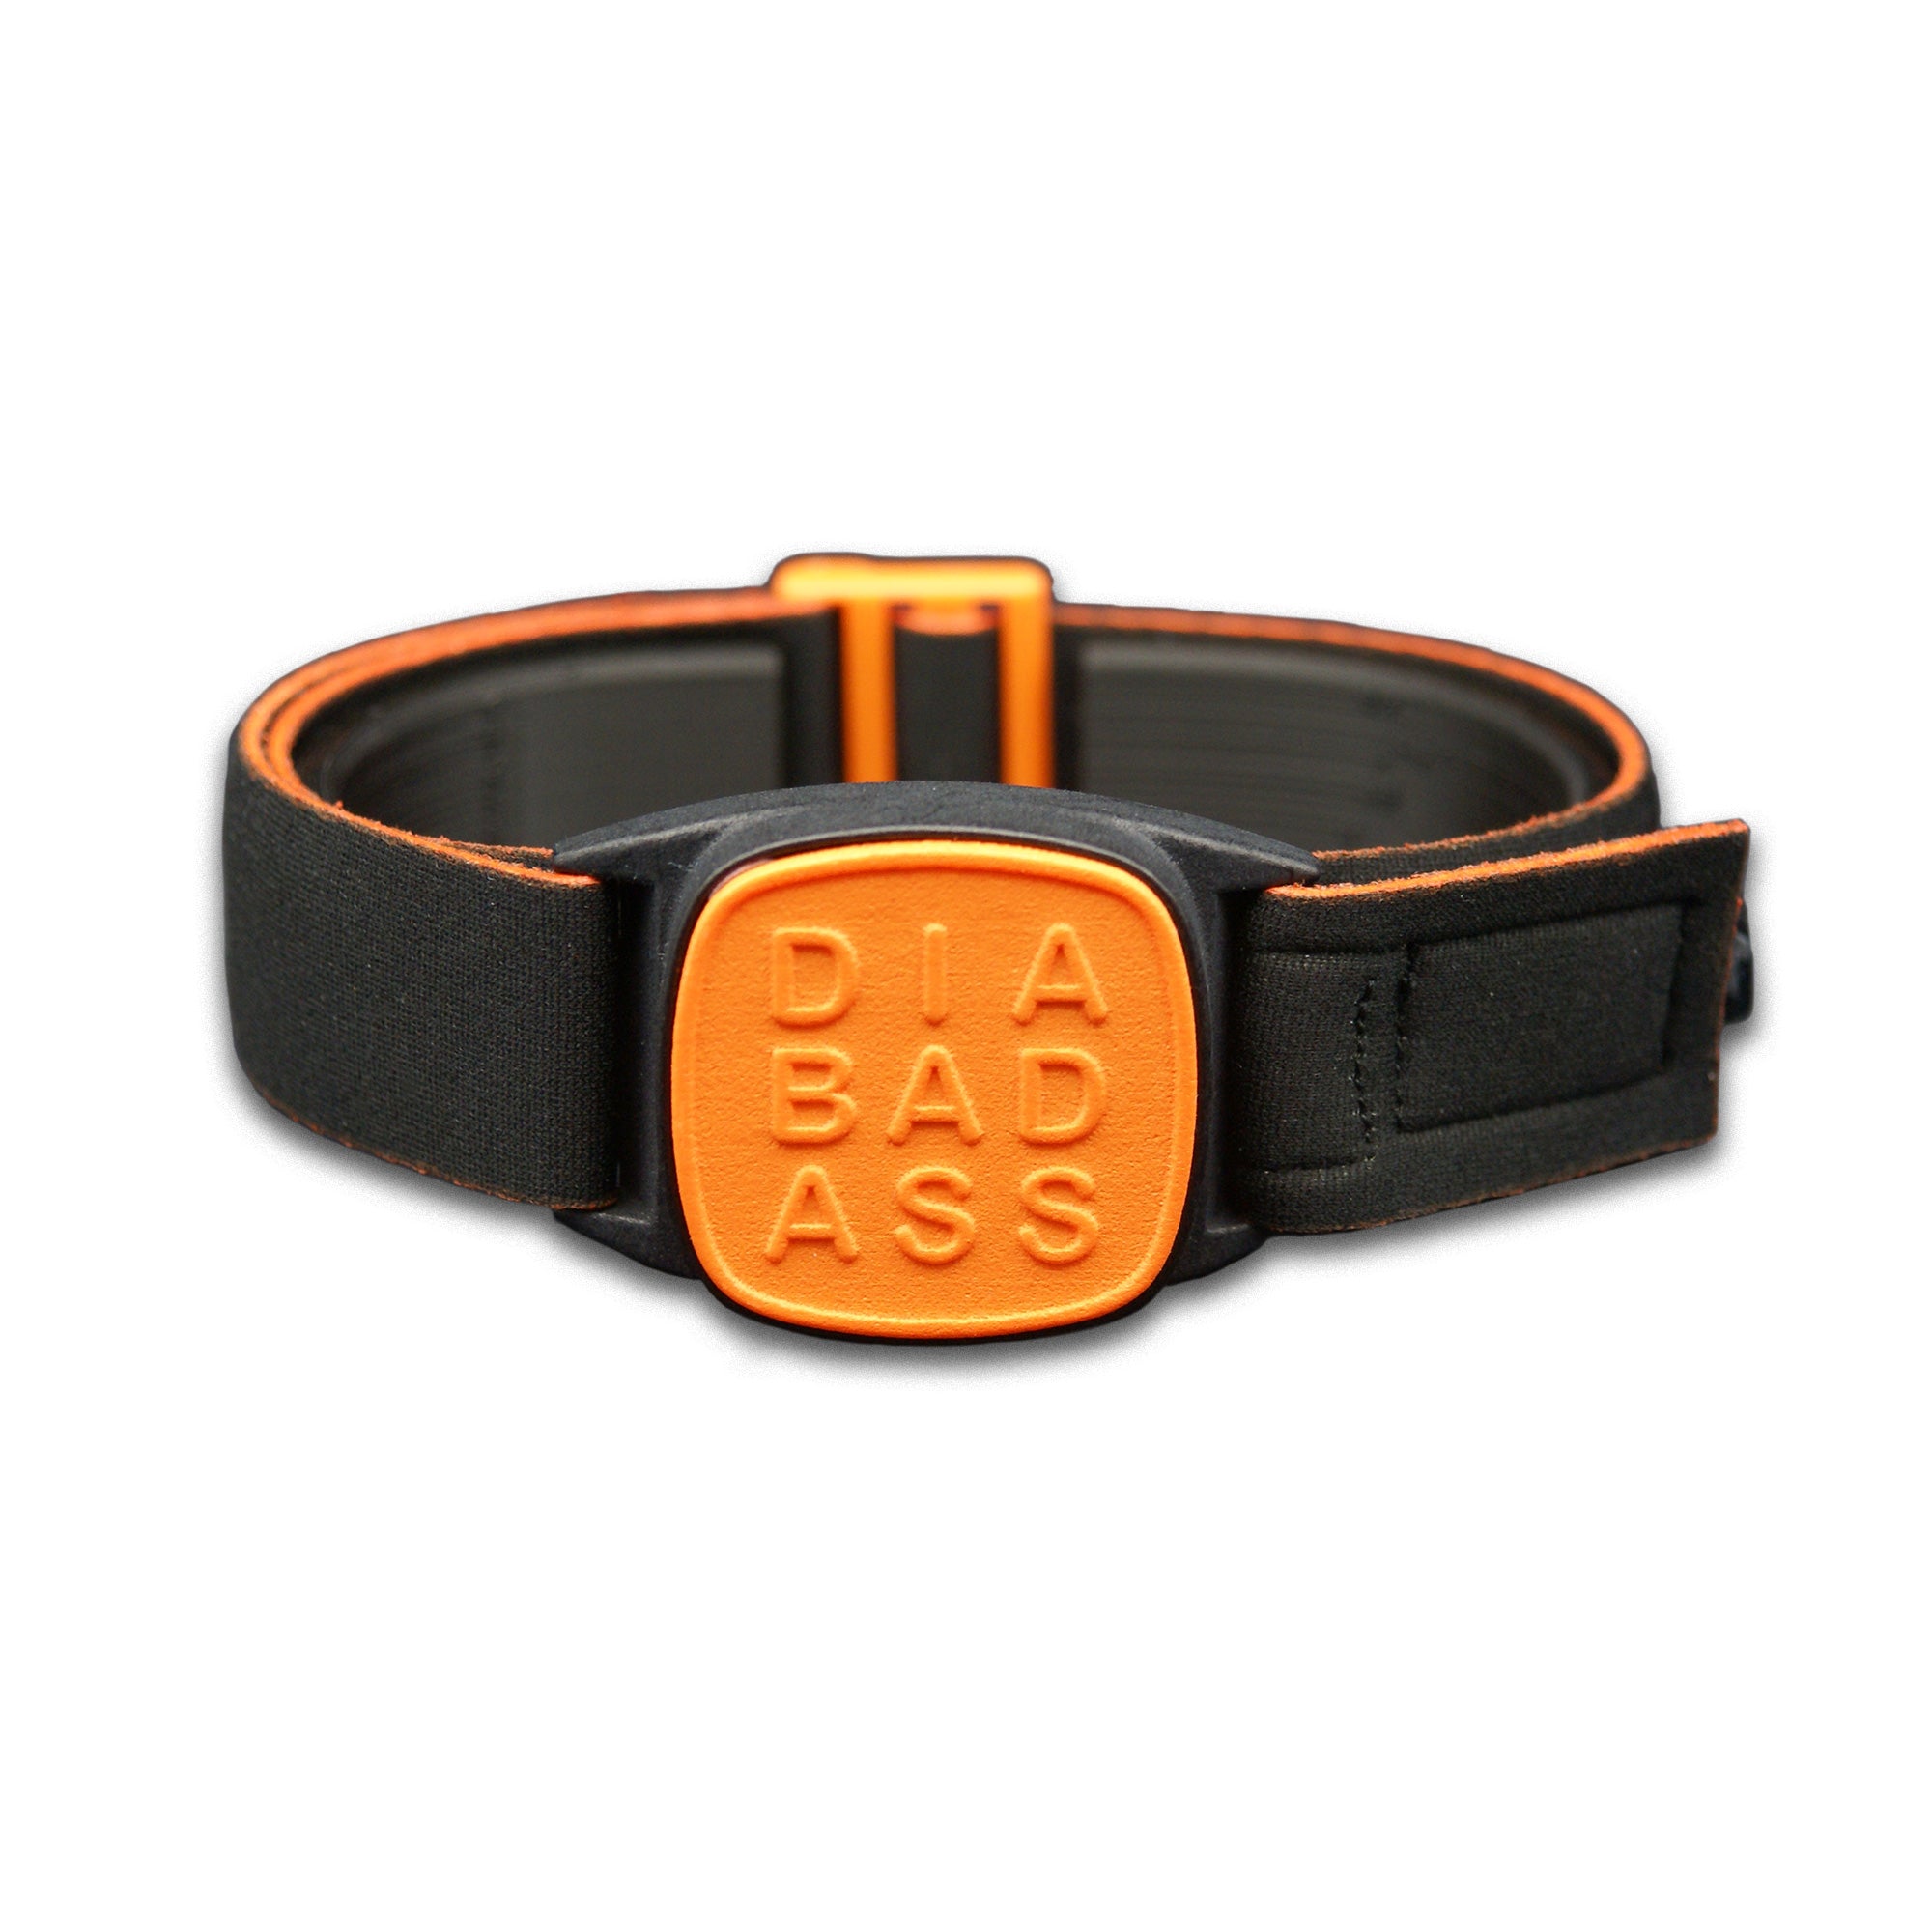  Libreband+ armband for Blucon. Orange cover with Diabadass design. 